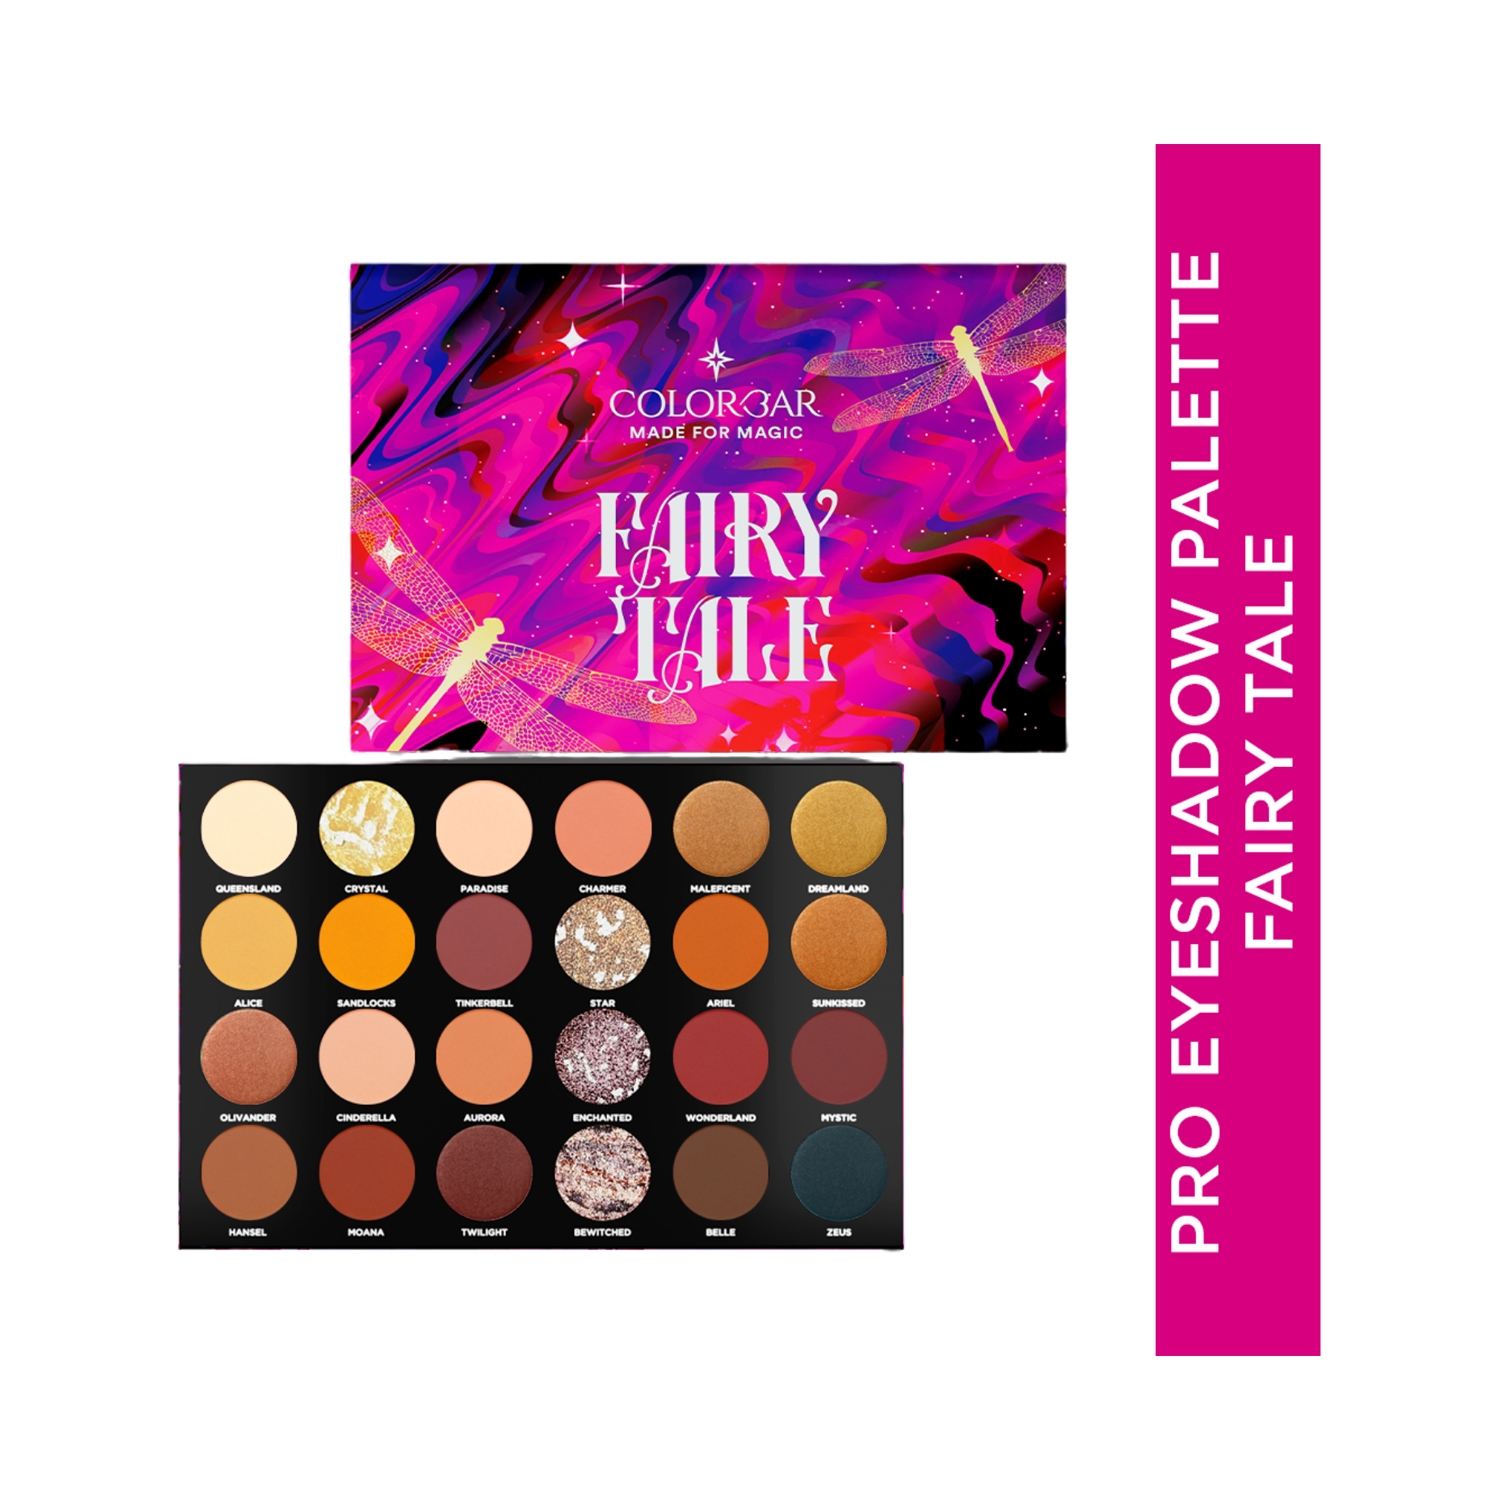 Colorbar | Colorbar Fairy-Tale Eyeshadow Palette - Multi-Color (30g)